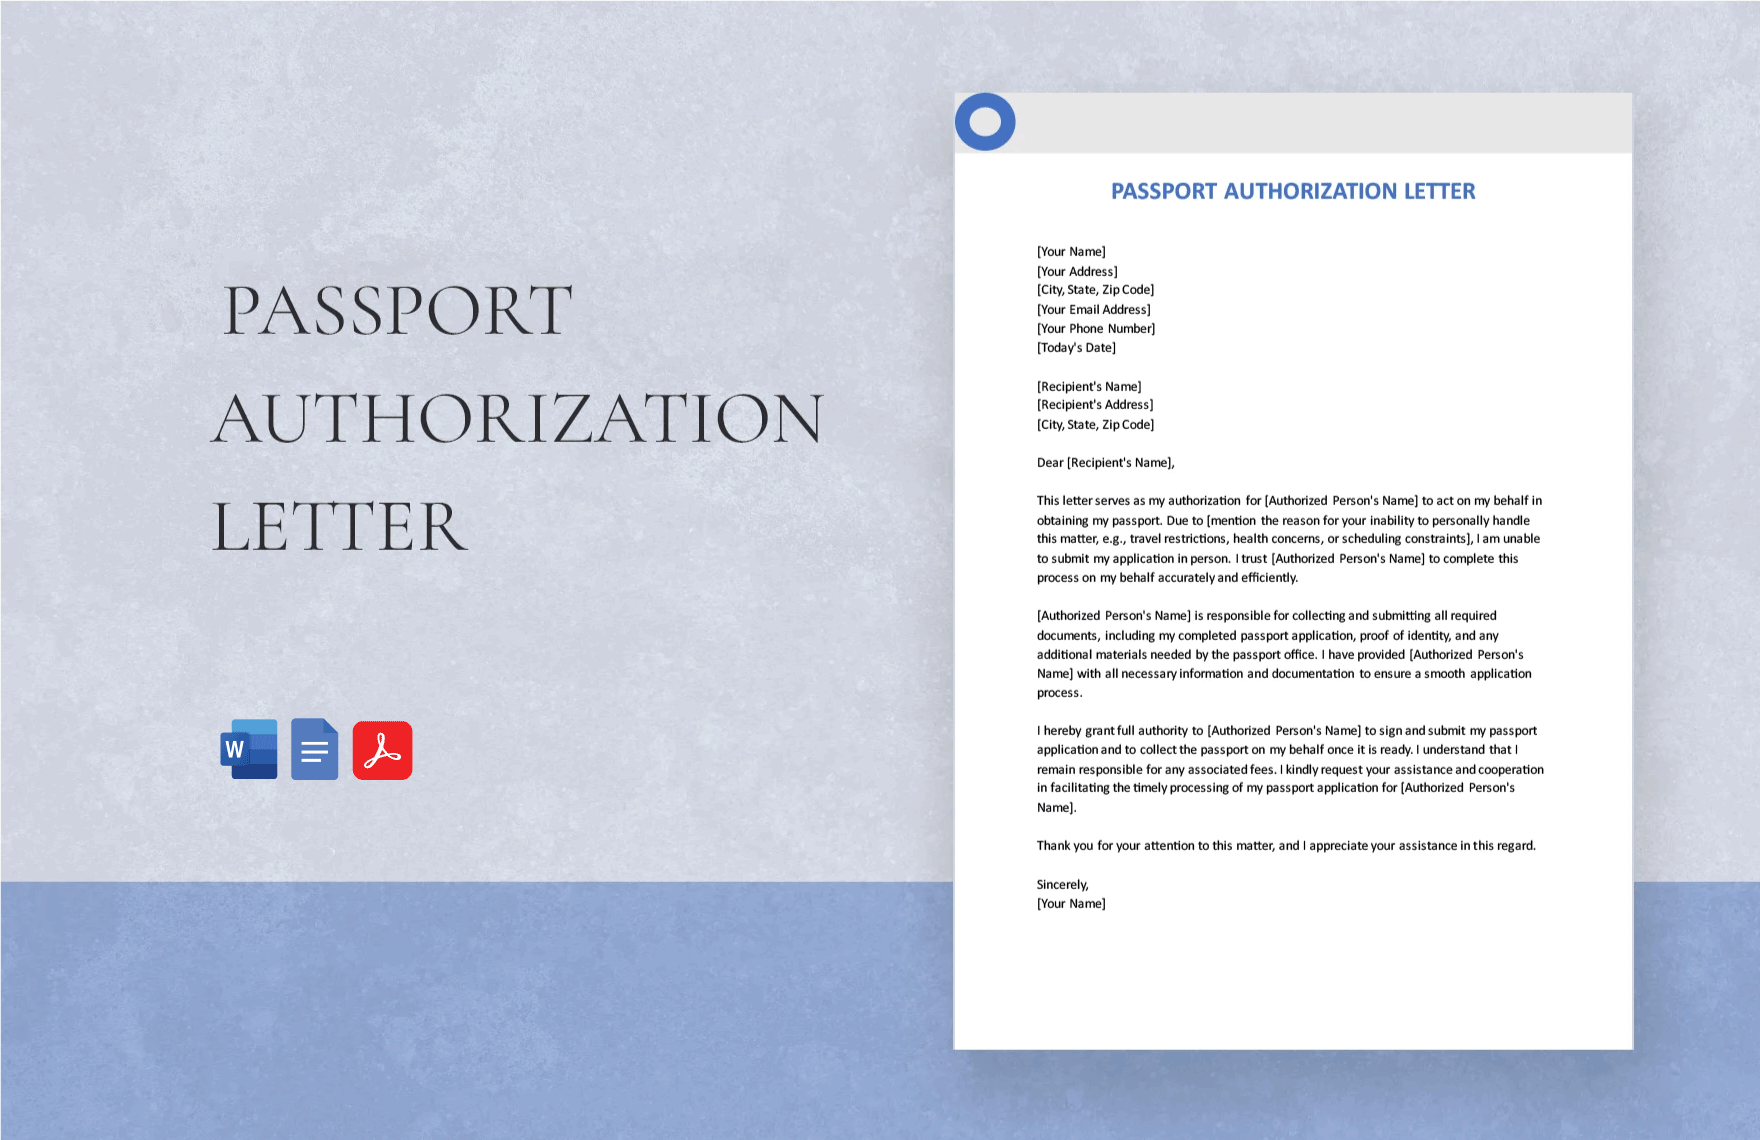 Passport Authorization Letter in Word, Google Docs, PDF